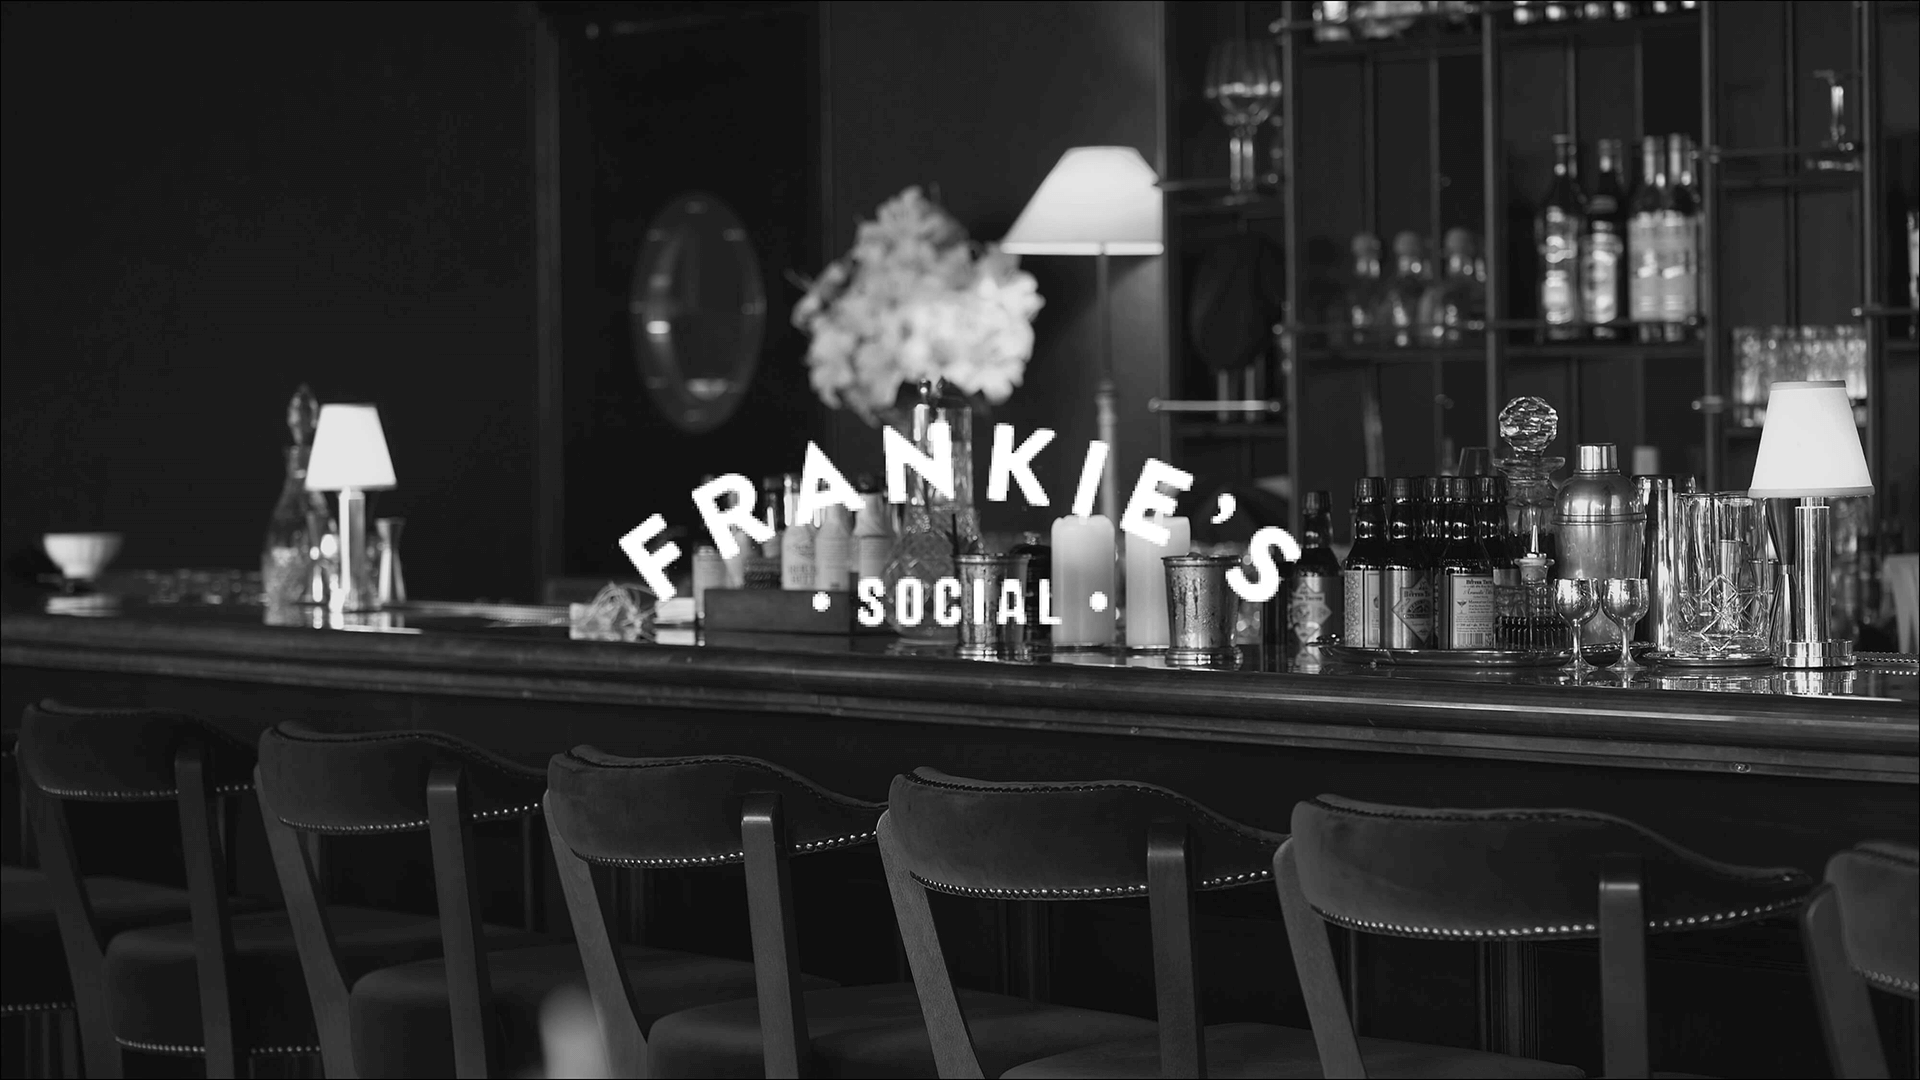 FRANKIE'S SOCIAL